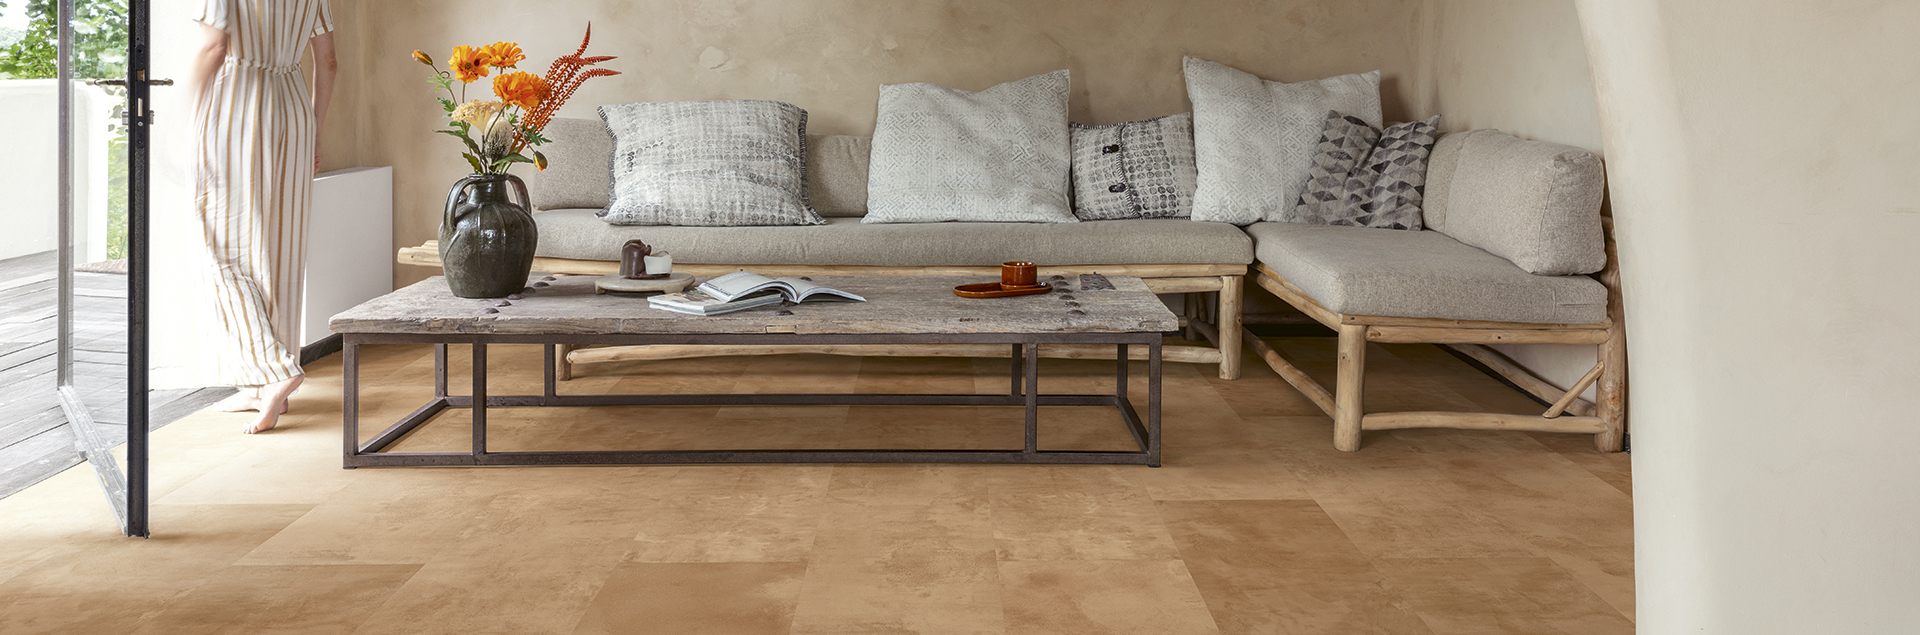 Living room with terracotta floor